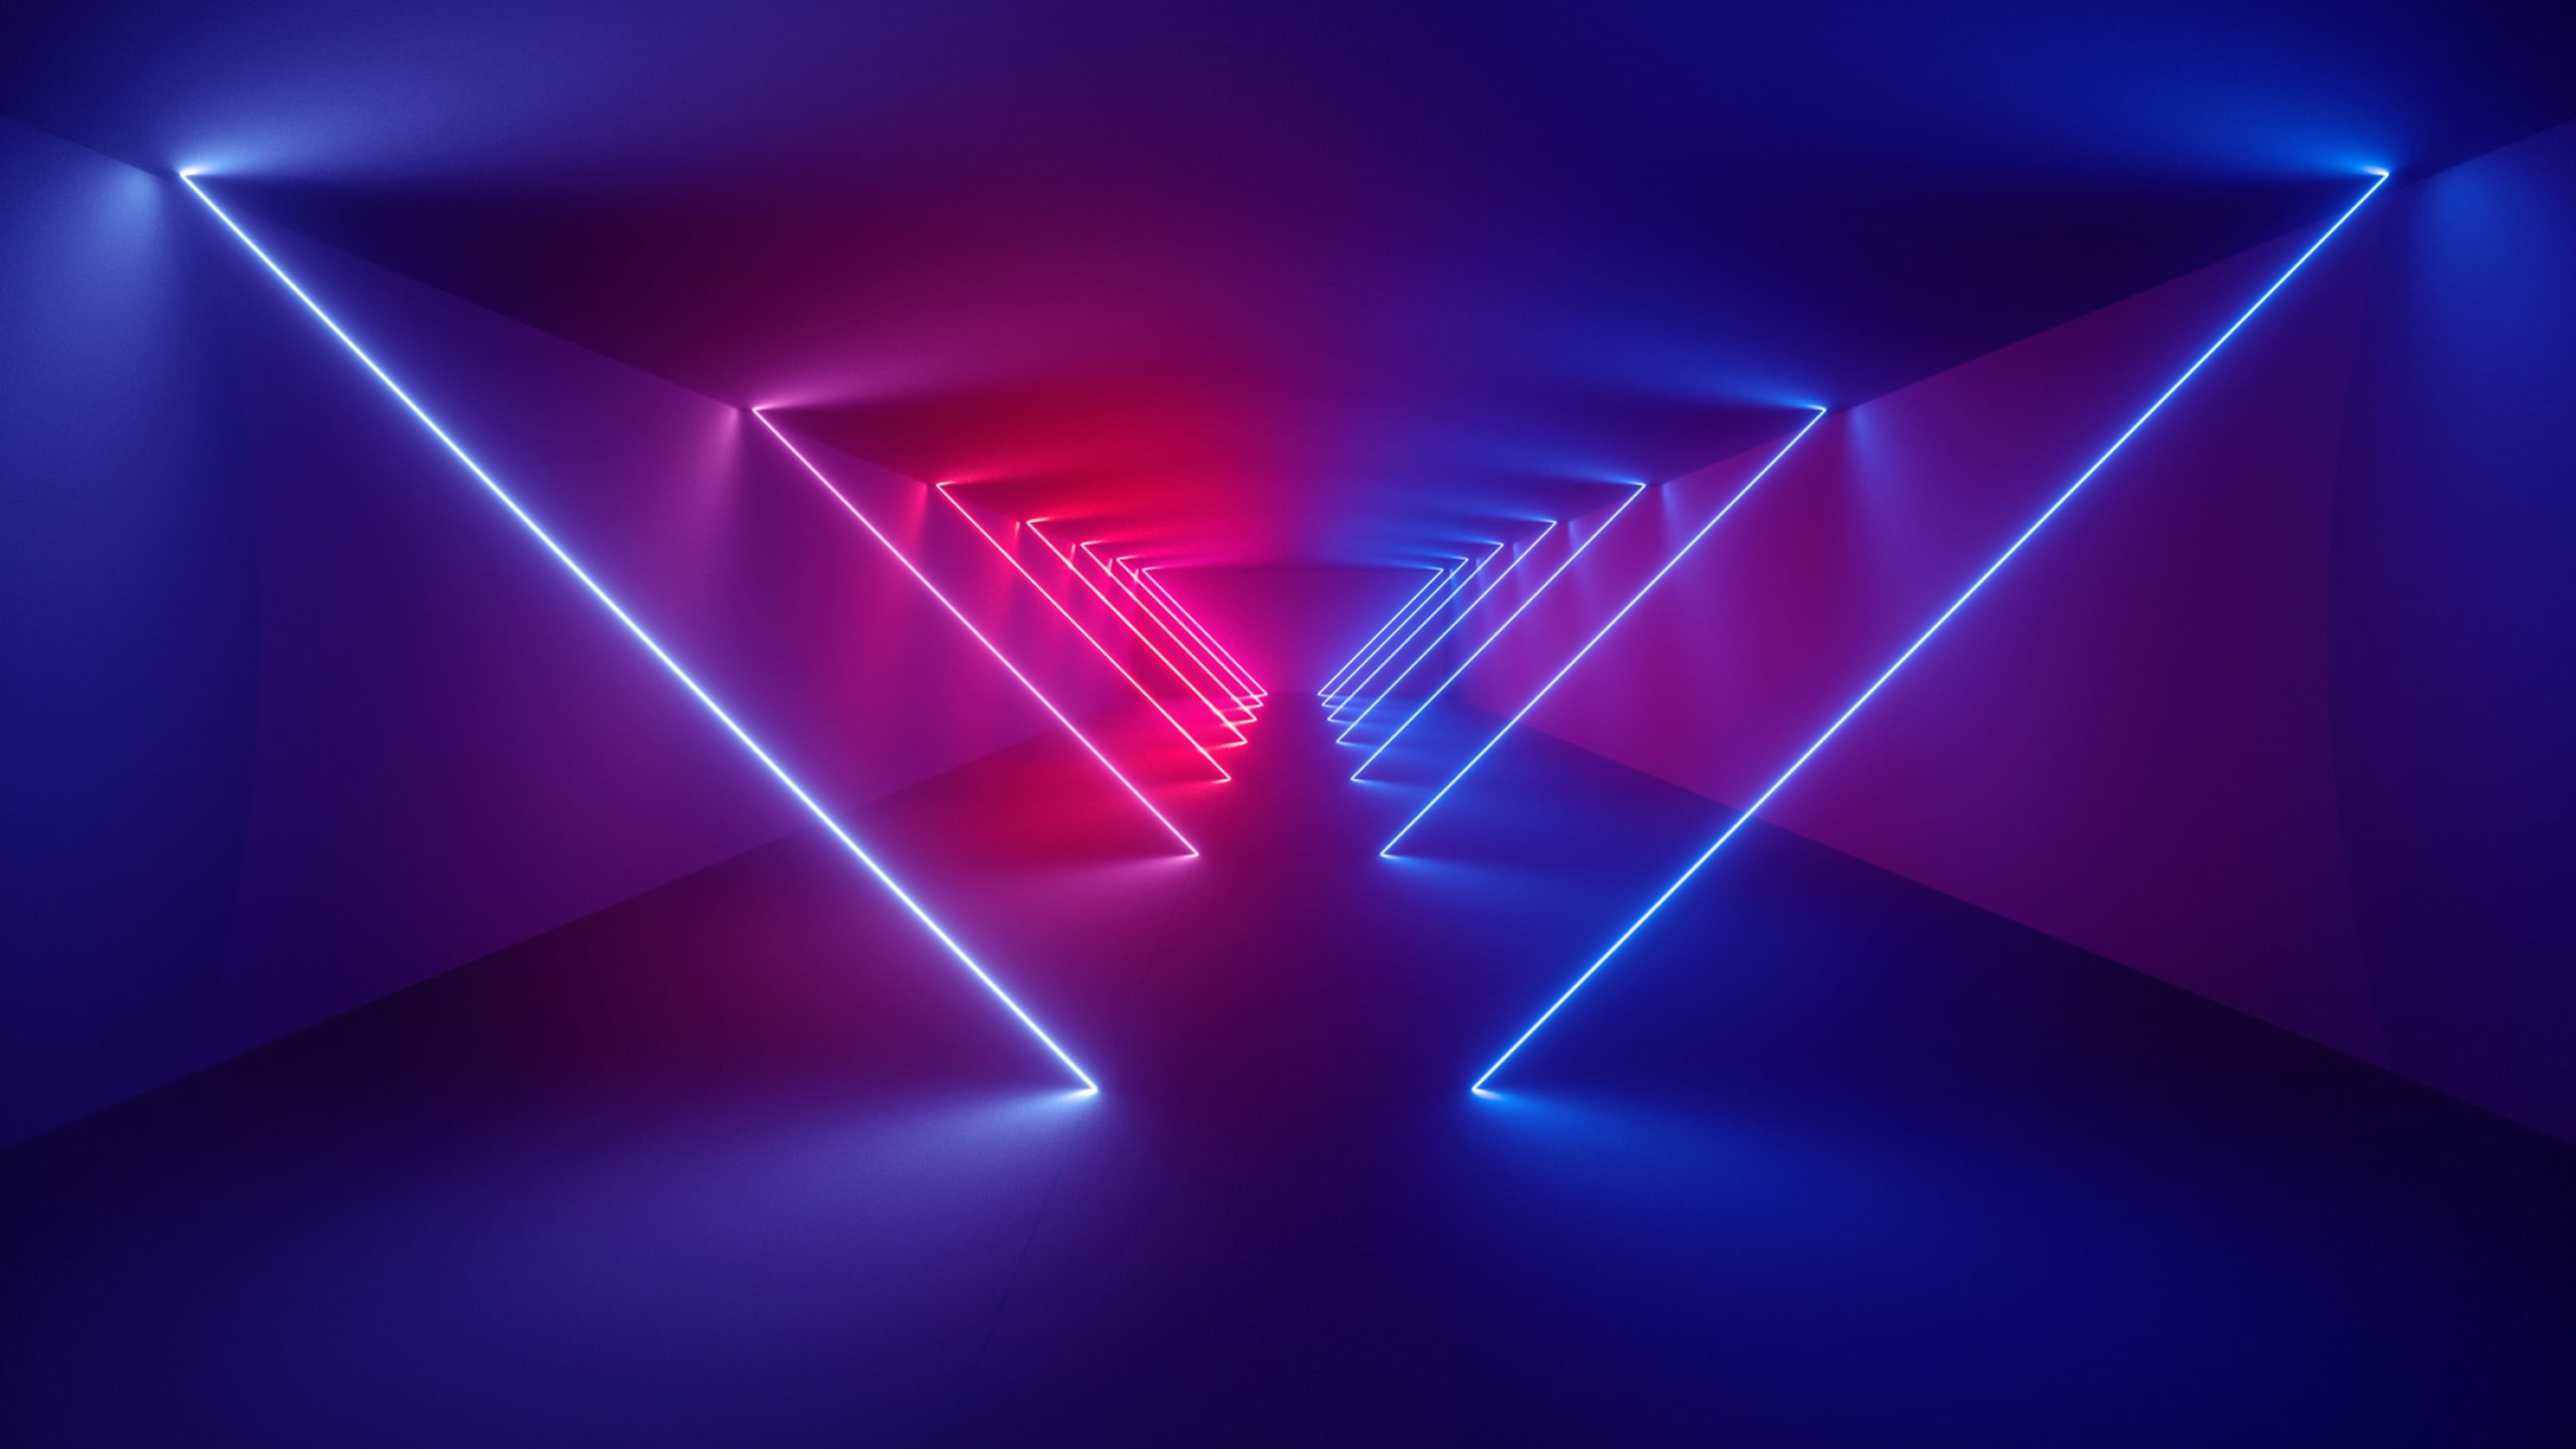 Artistic Neon 4k Ultra HD Wallpaper